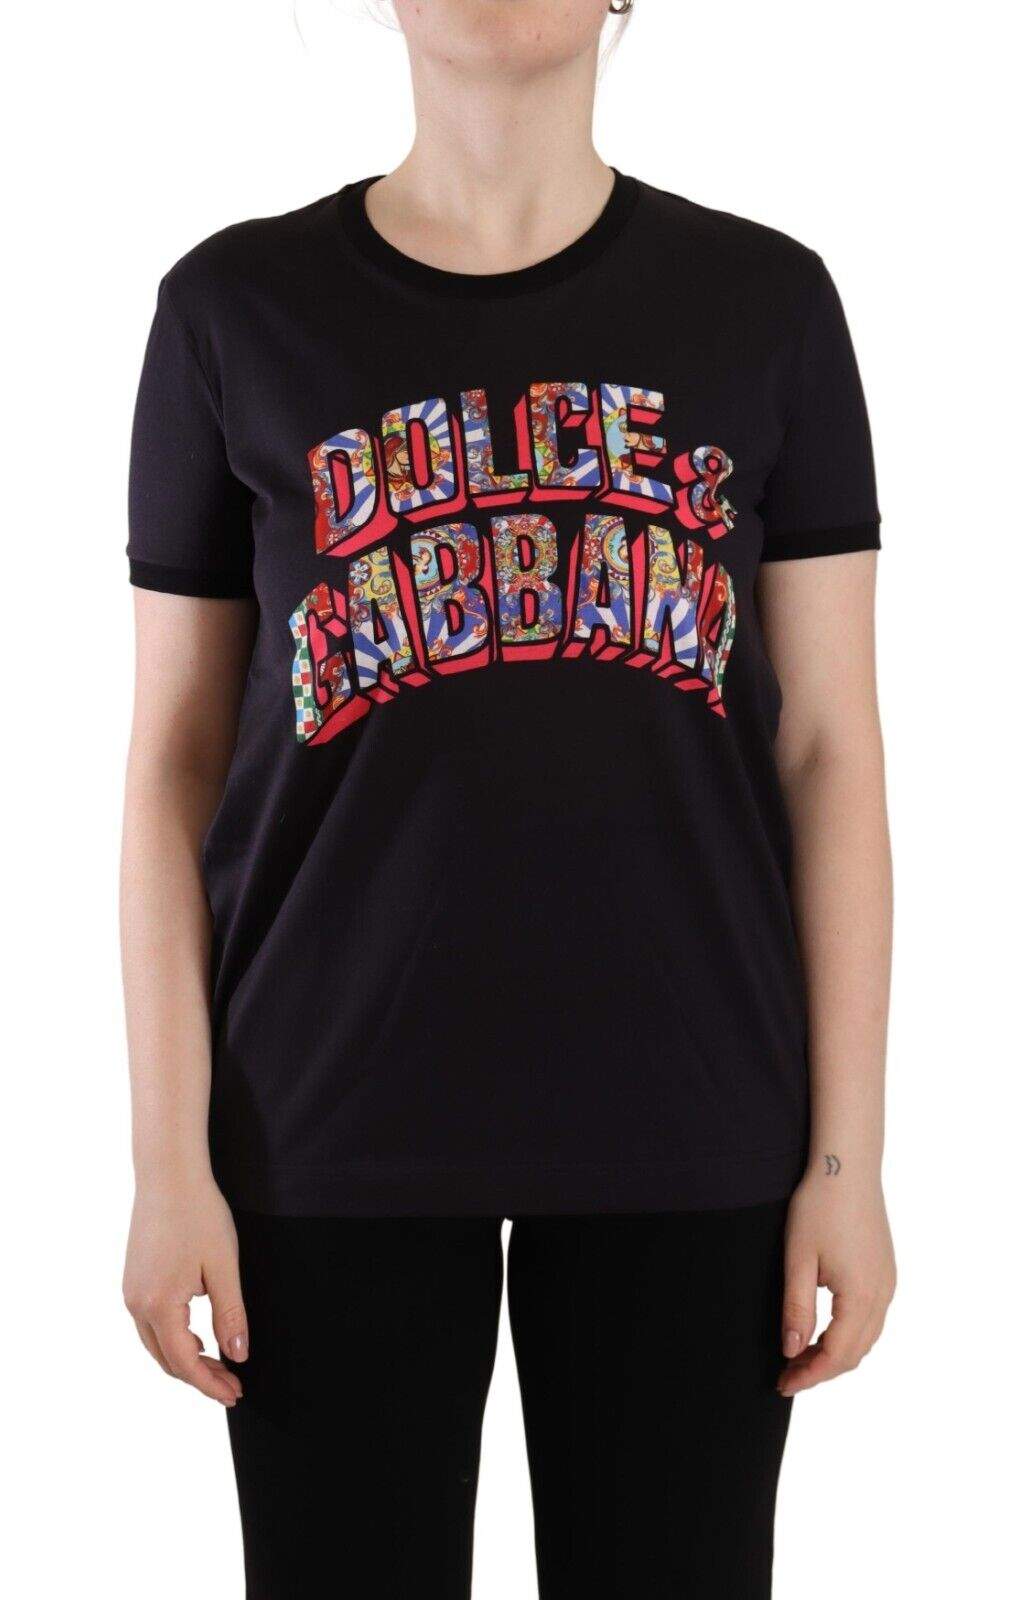 Dolce & Gabbana Black Logo Print Cotton Crew Neck Tee T-shirt Black, Dolce & Gabbana, feed-1, IT42|M, Tops & T-Shirts - Women - Clothing at SEYMAYKA